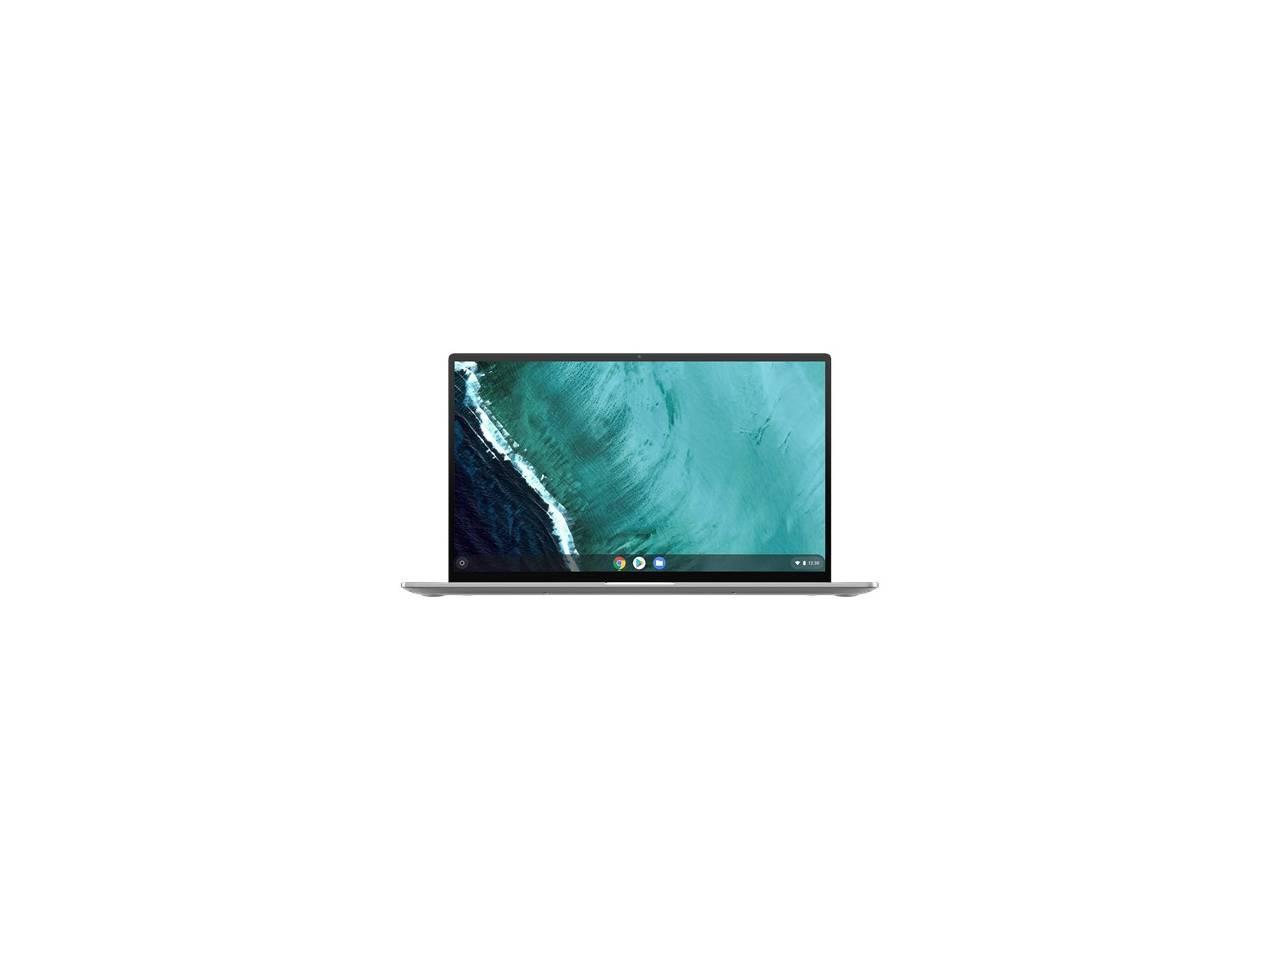 ASUS Chromebook Flip C434TA-DS588T Chromebook Intel Core i5 8200Y (1.30 GHz) 8 GB Memory 128 GB SSD 14.0" Touchscreen Chrome OS